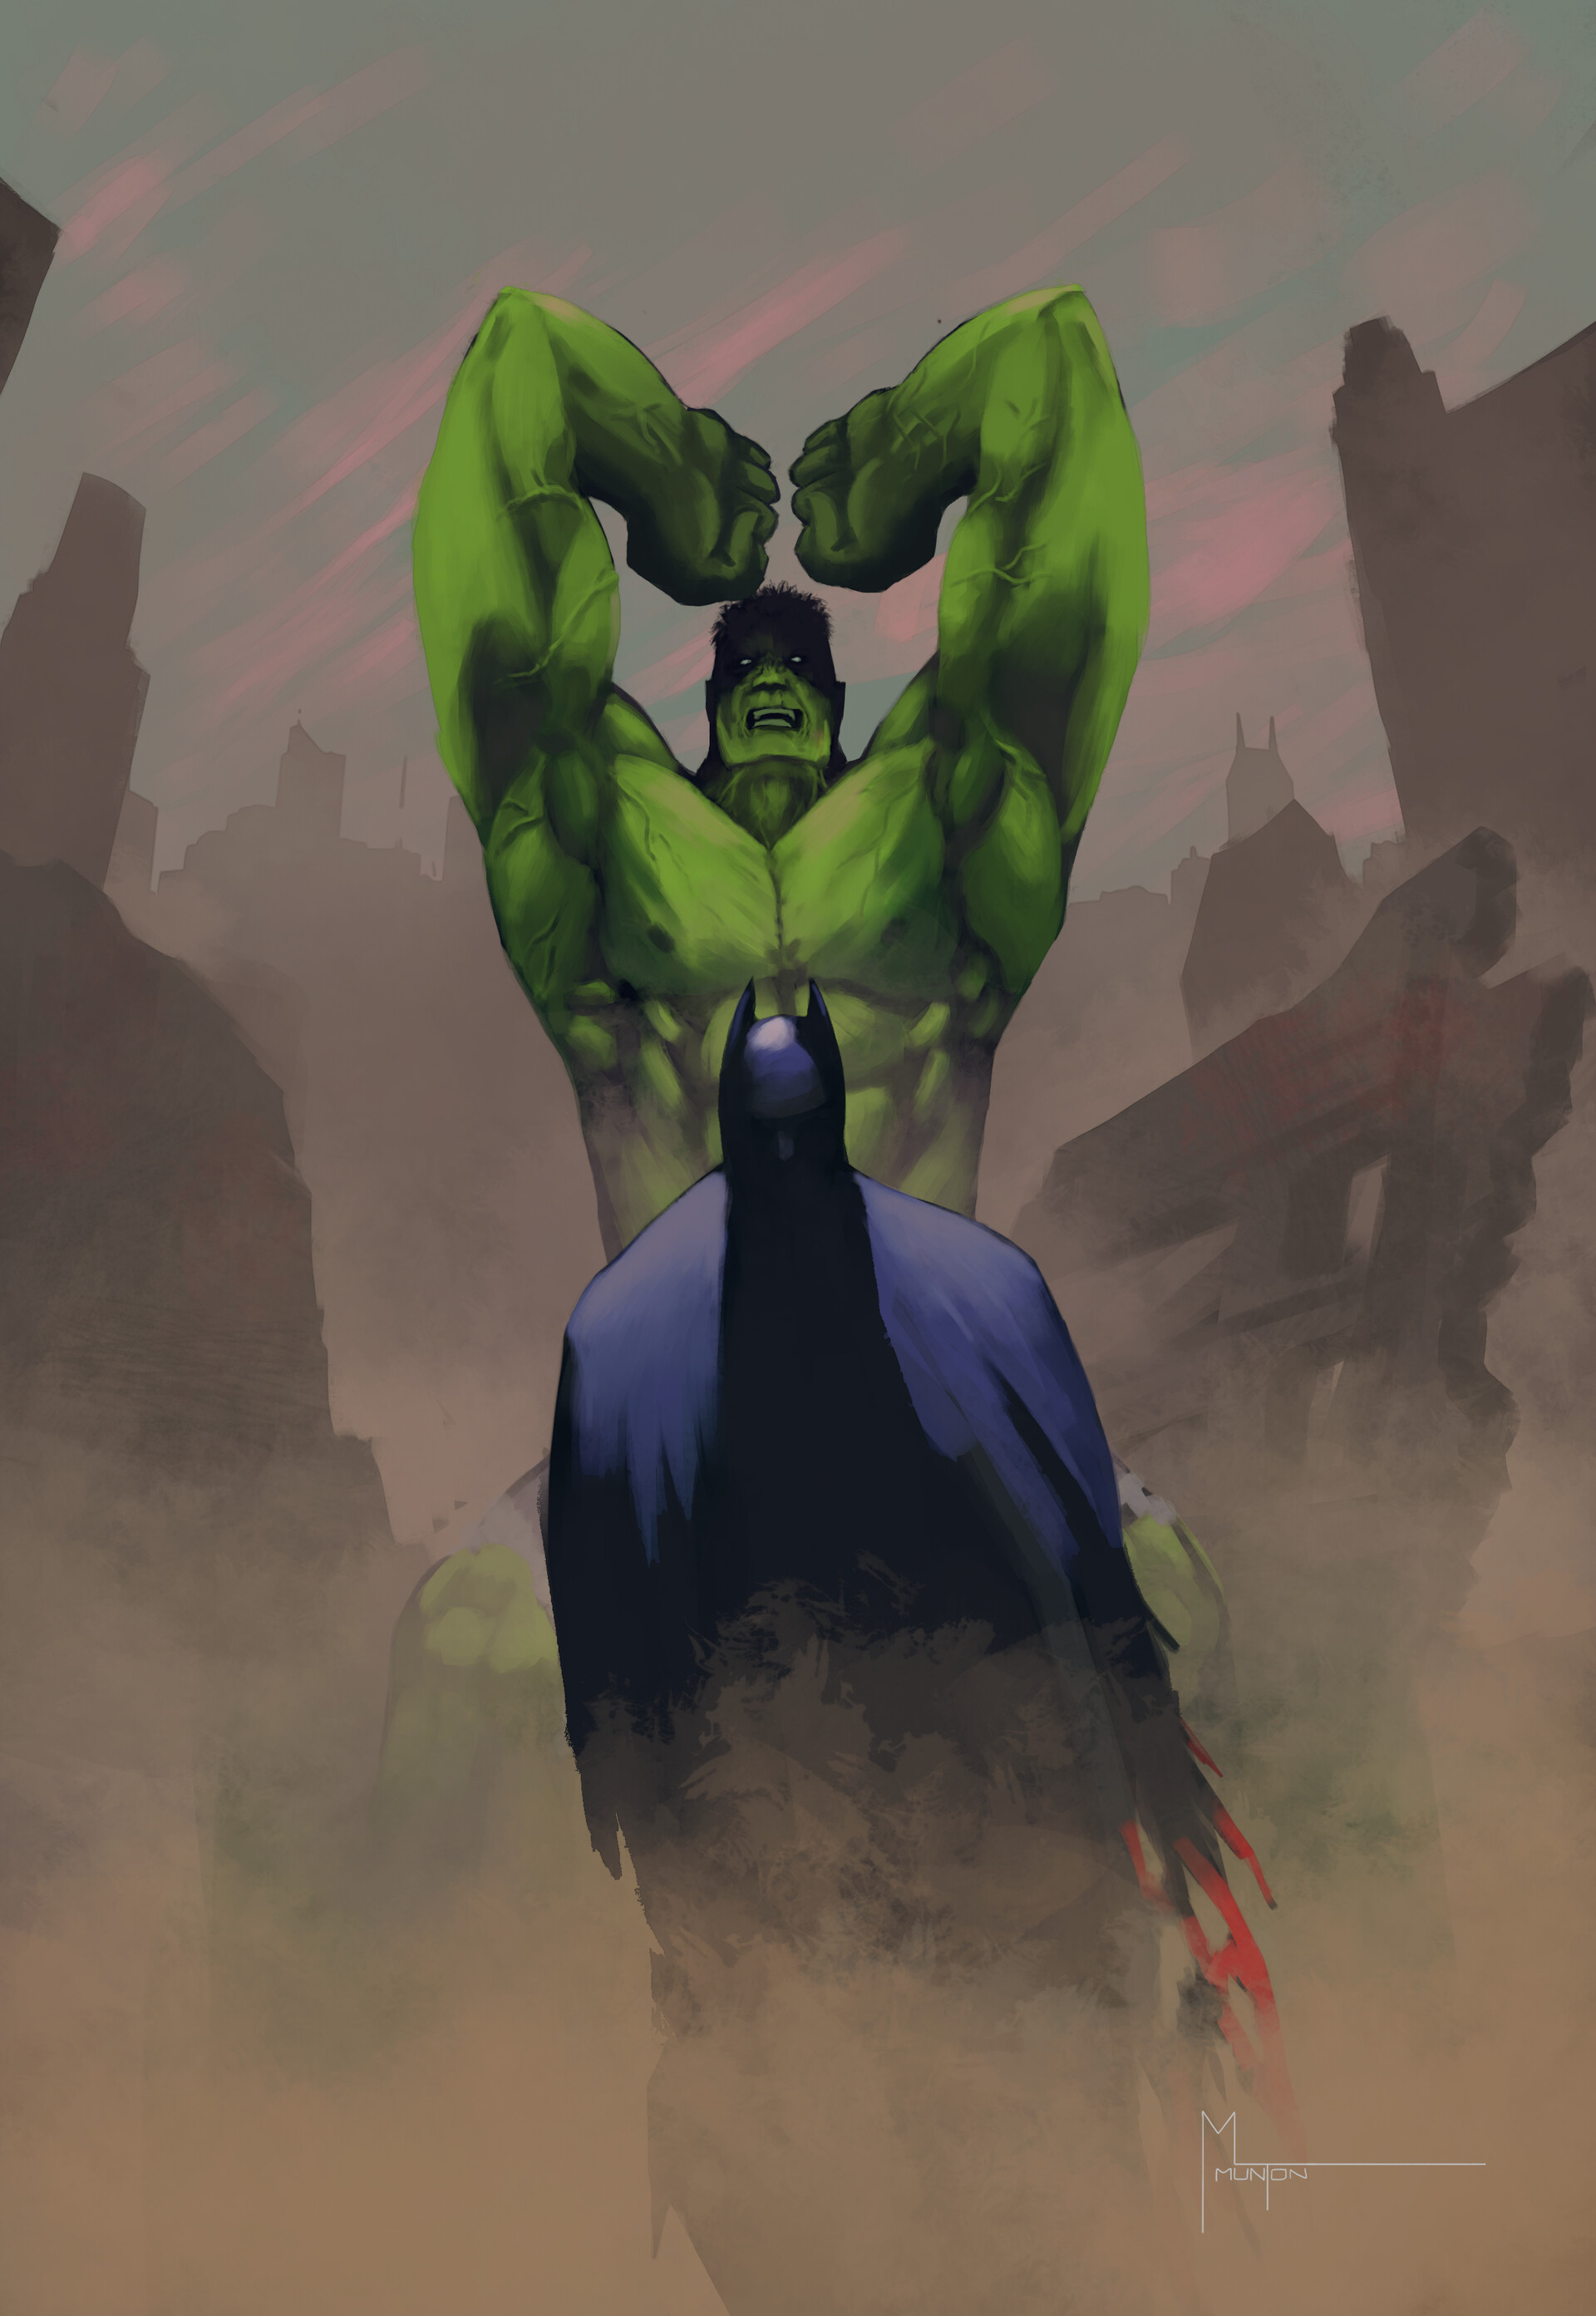 ArtStation - Batman Vs Hulk cover art